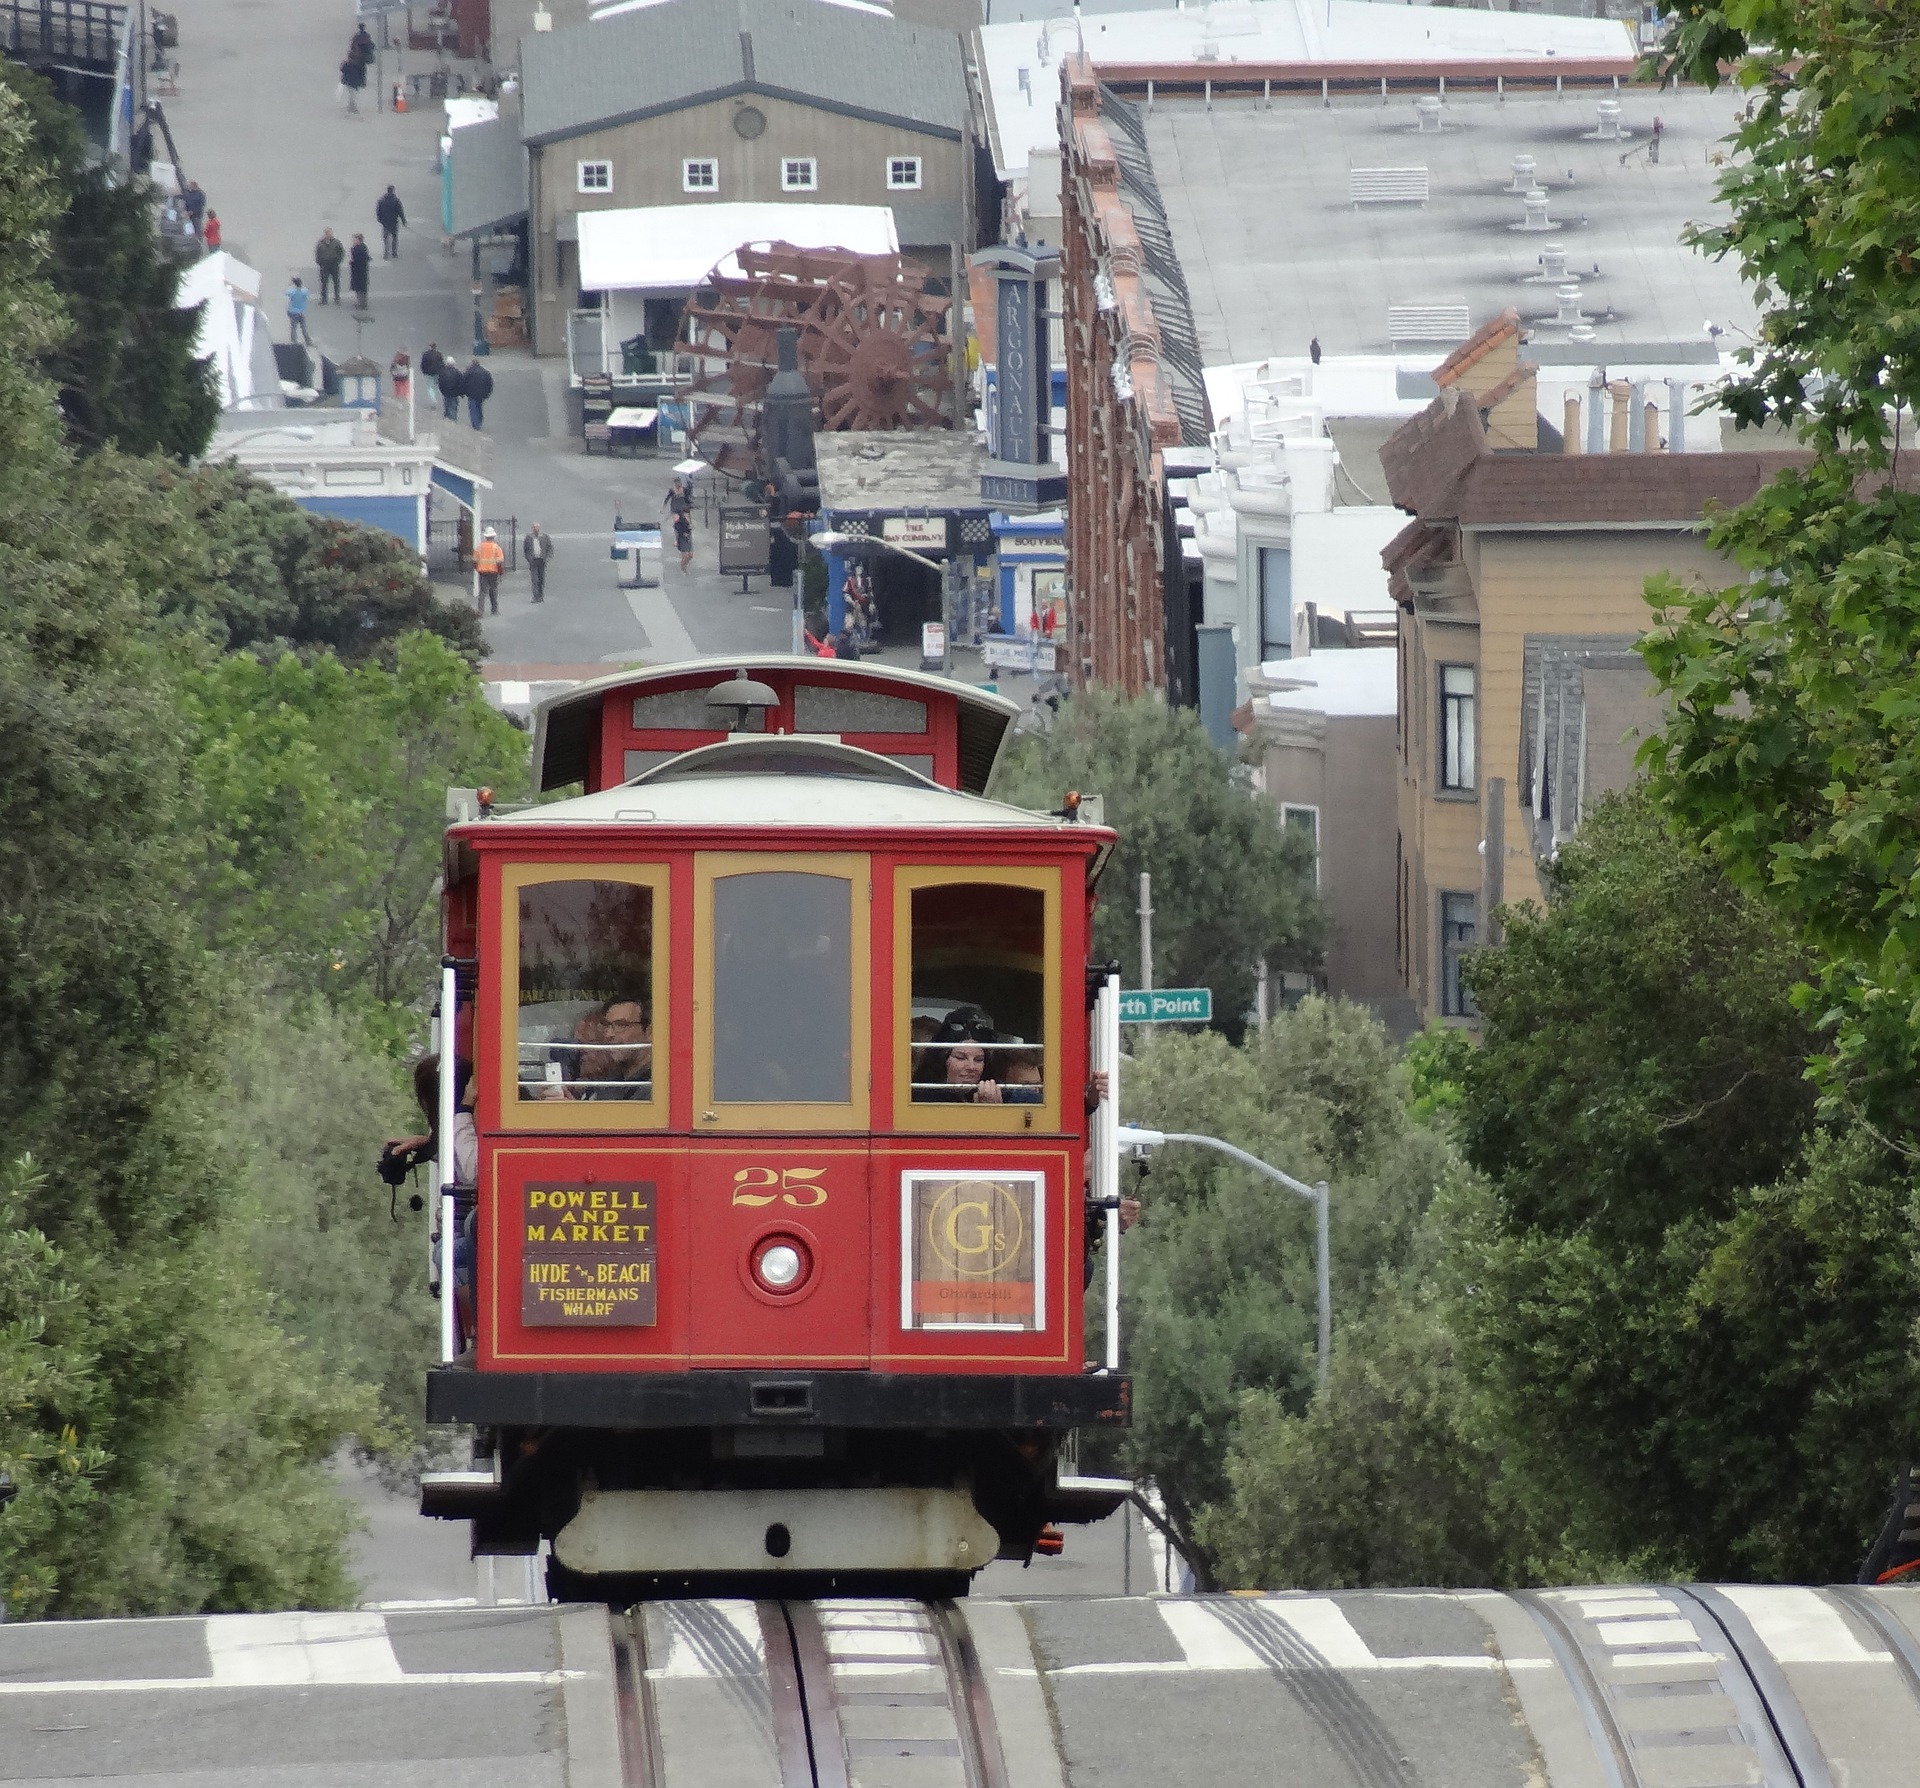 Канатный трамвай. Трамвай в Сан-Франциско. Канатный трамвай Сан-Франциско. Сан-Франциско Калифорния трамвай. Улица с трамвайчиками Сан Франциско.